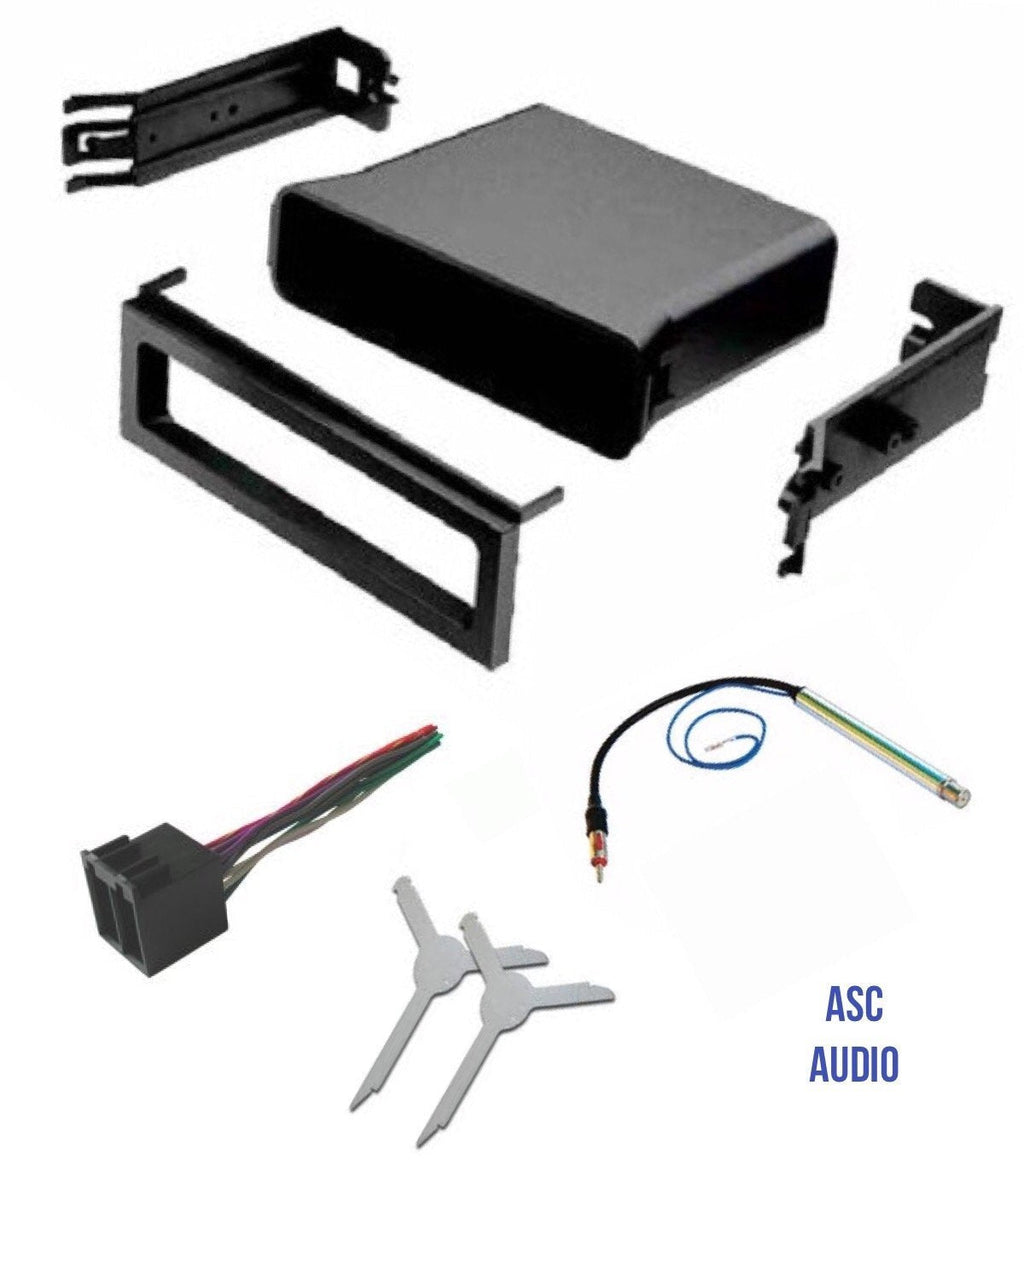 ASC Audio Car Stereo Dash Pocket Kit, Wire Harness, Antenna Adapter, and Radio Removal Tool for Installing a Single Din Radio for VW Volkswagen- 1999 2000 2001 Golf/GTI, Jetta, Passat - LeoForward Australia